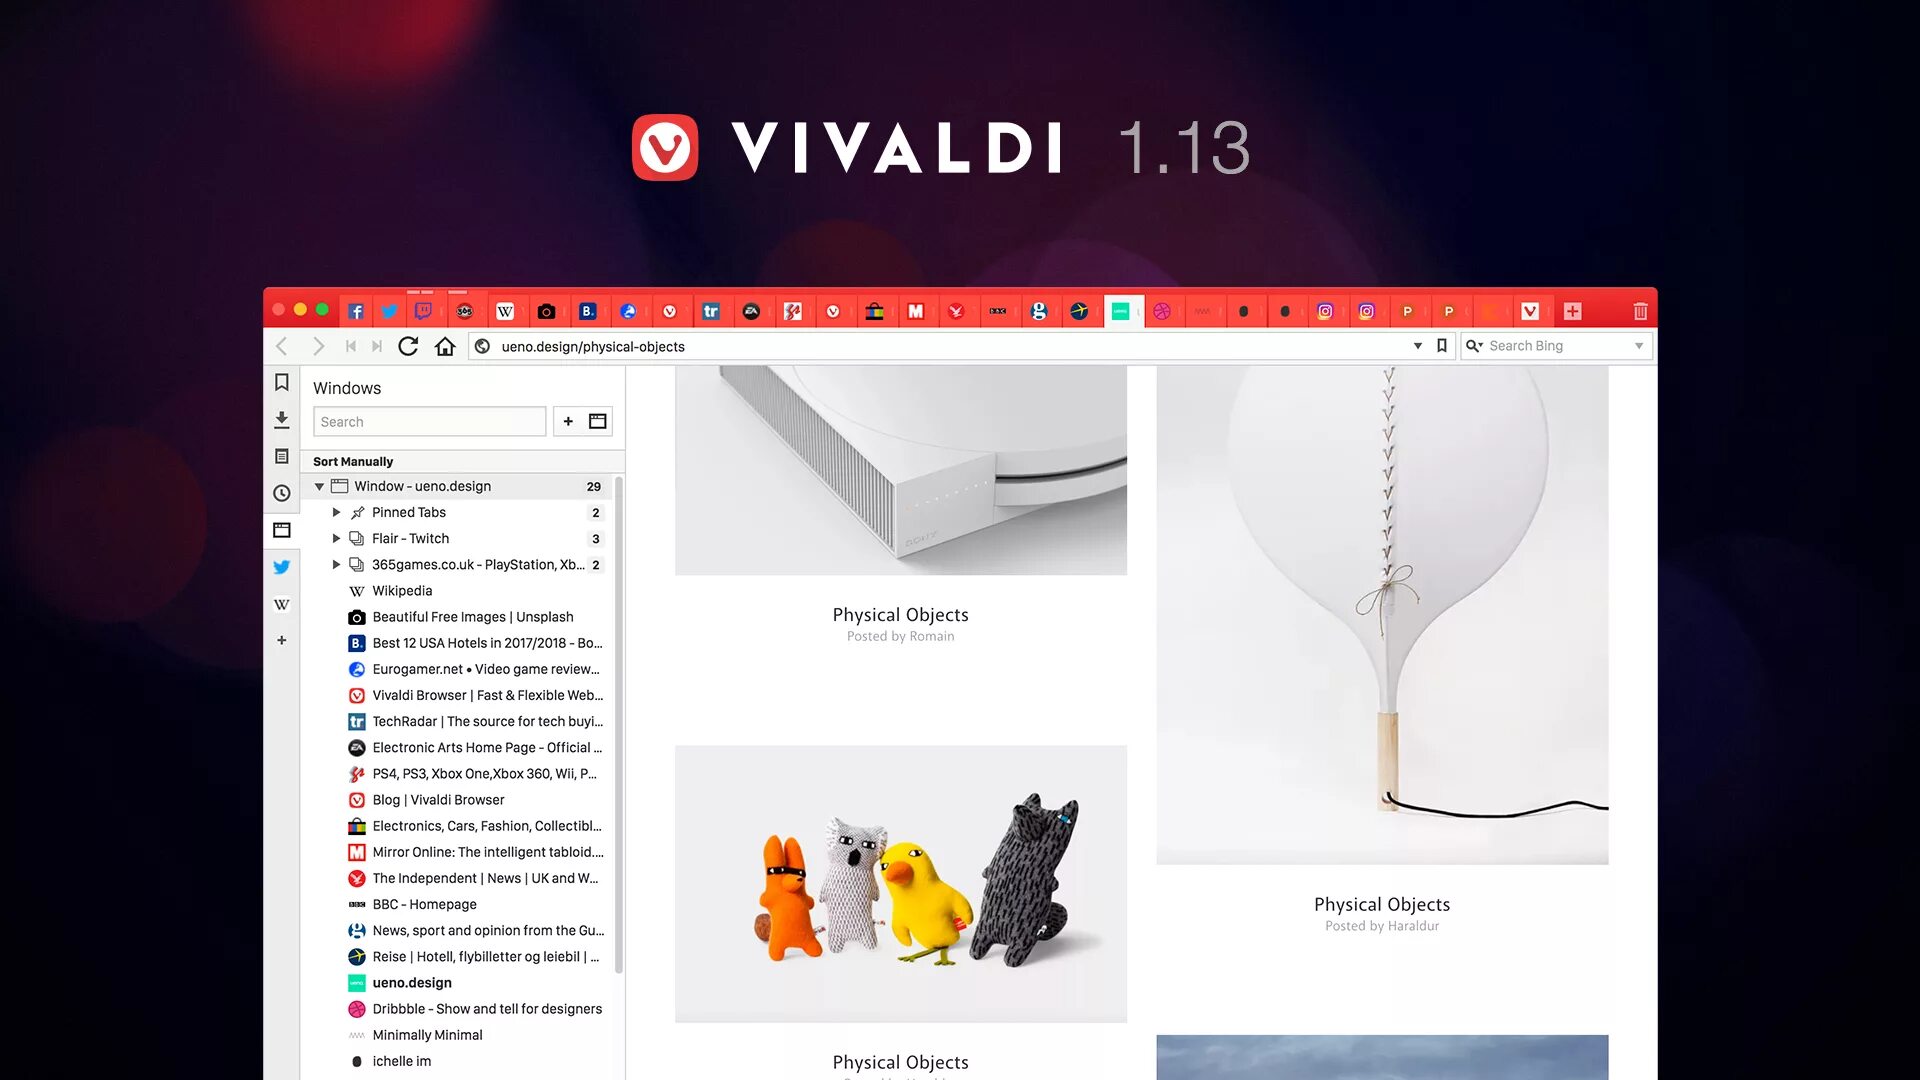 Vivaldi browser. Vivaldi (веб-браузер). Vivaldi web browser. Vivaldi для Windows. Post objects